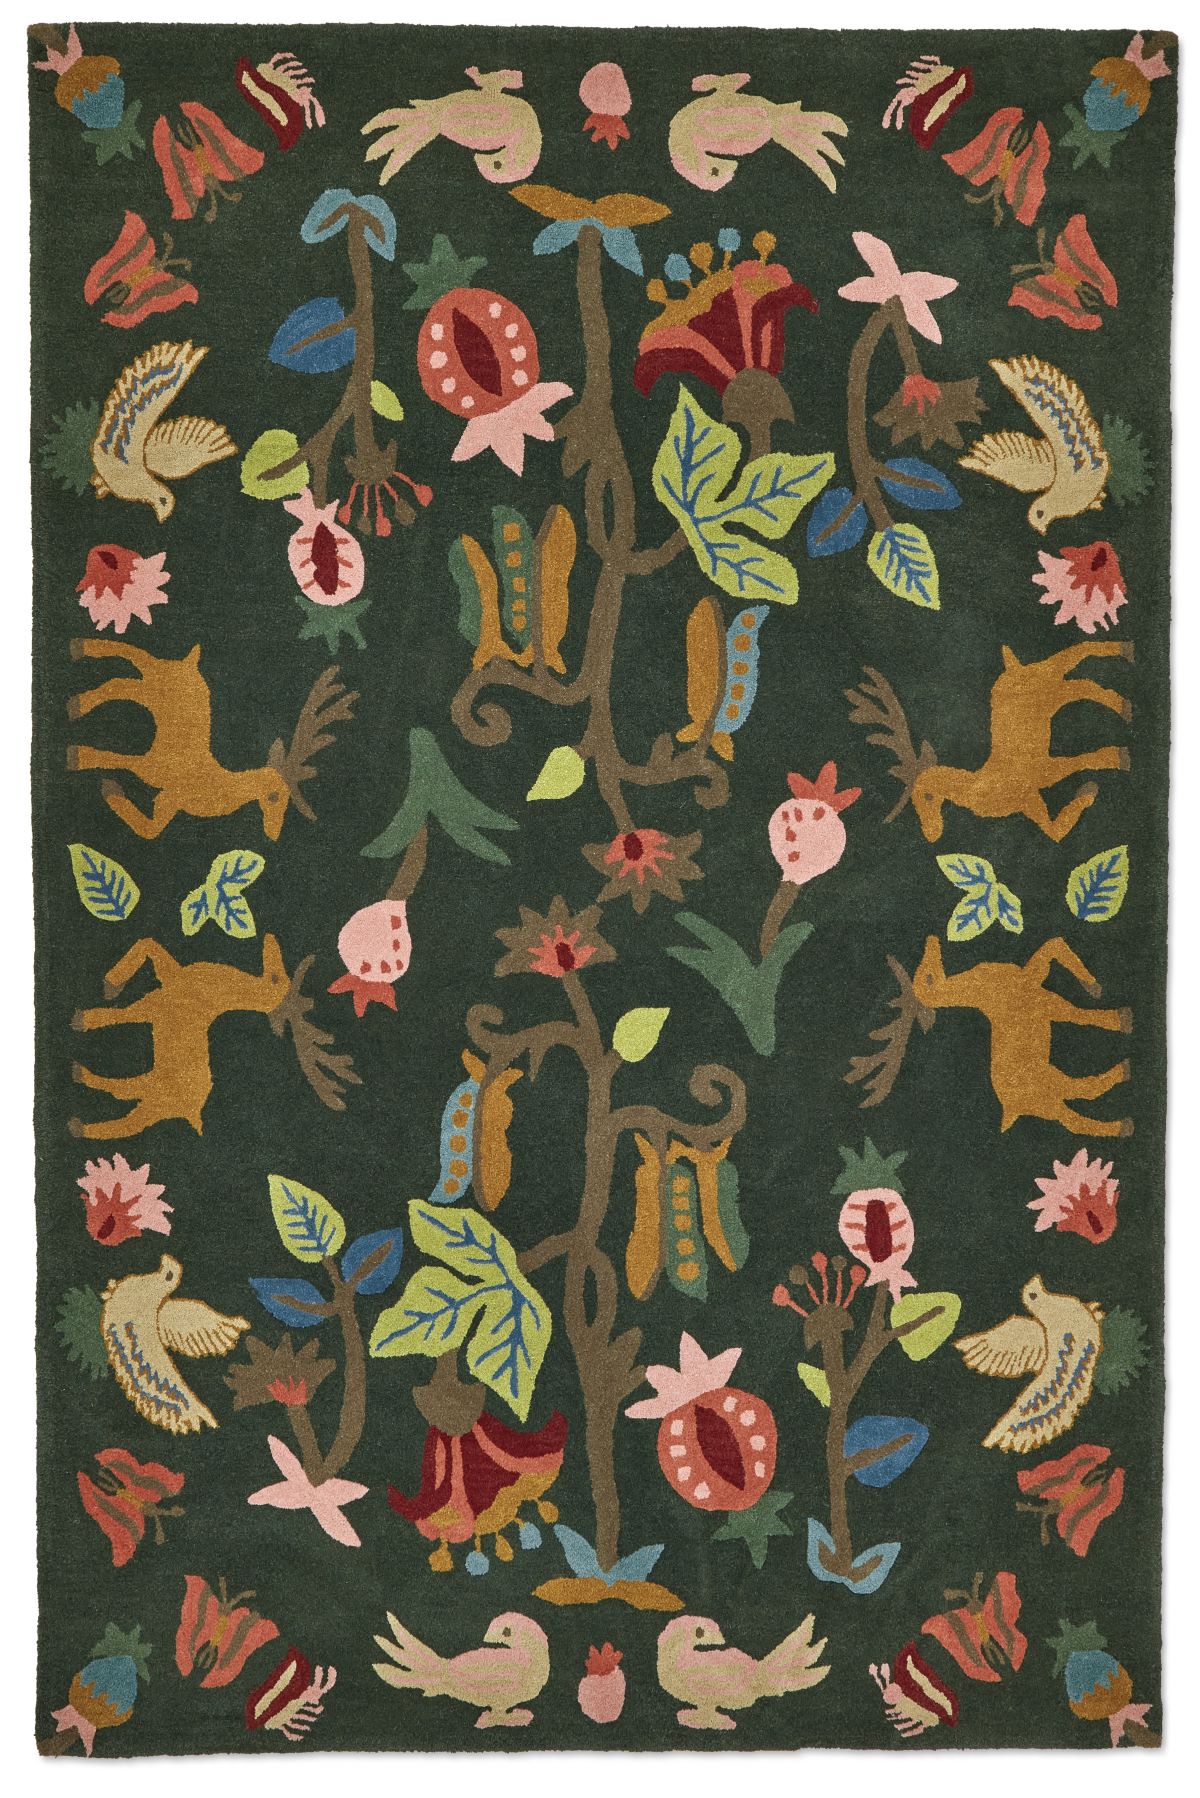 sanderson-rug-forest-of-dean-forest-green-146907